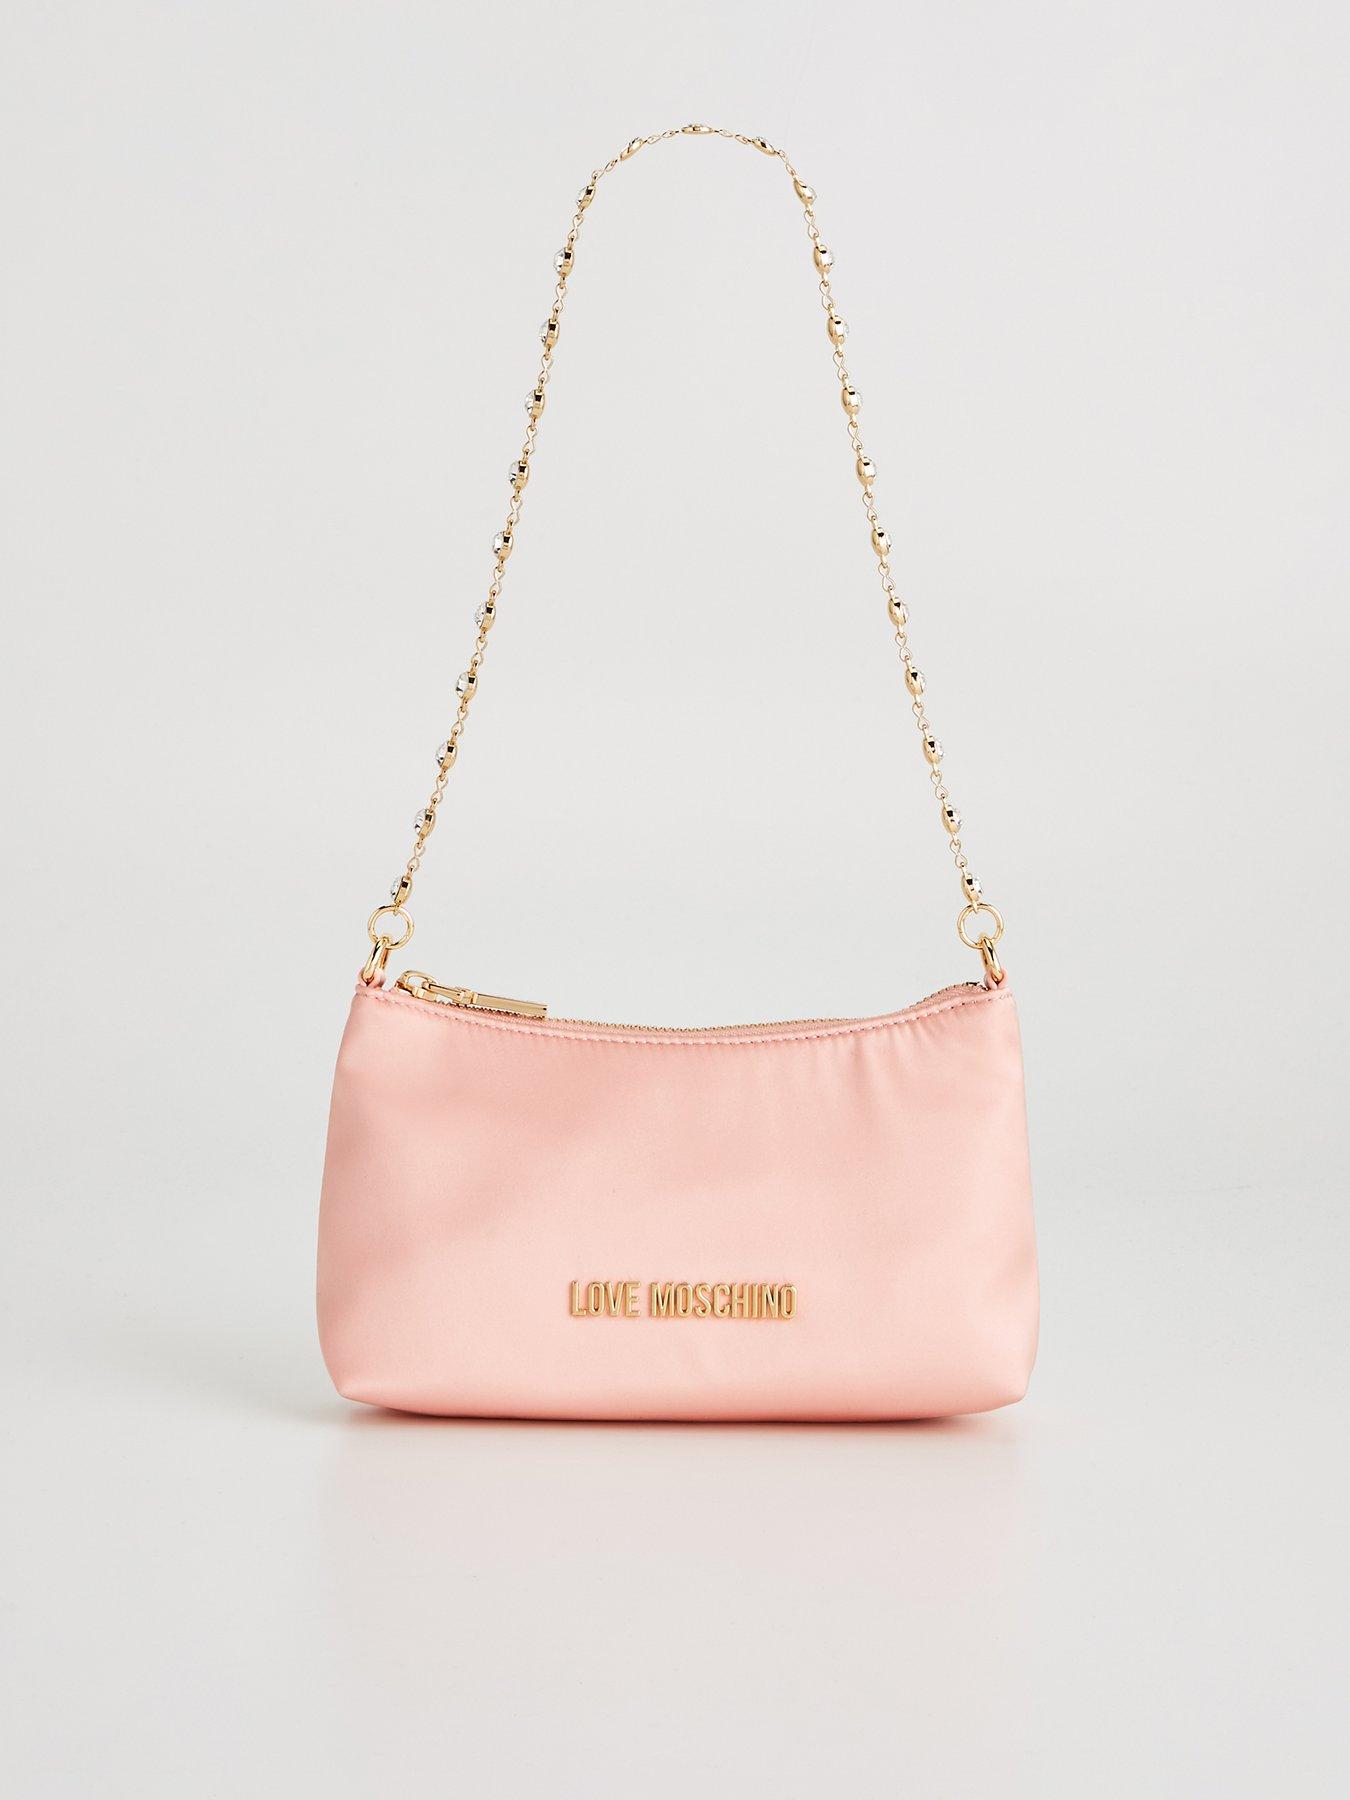 Sell Your Designer Bag For Cash | Luxury Brands Handbag Buyers